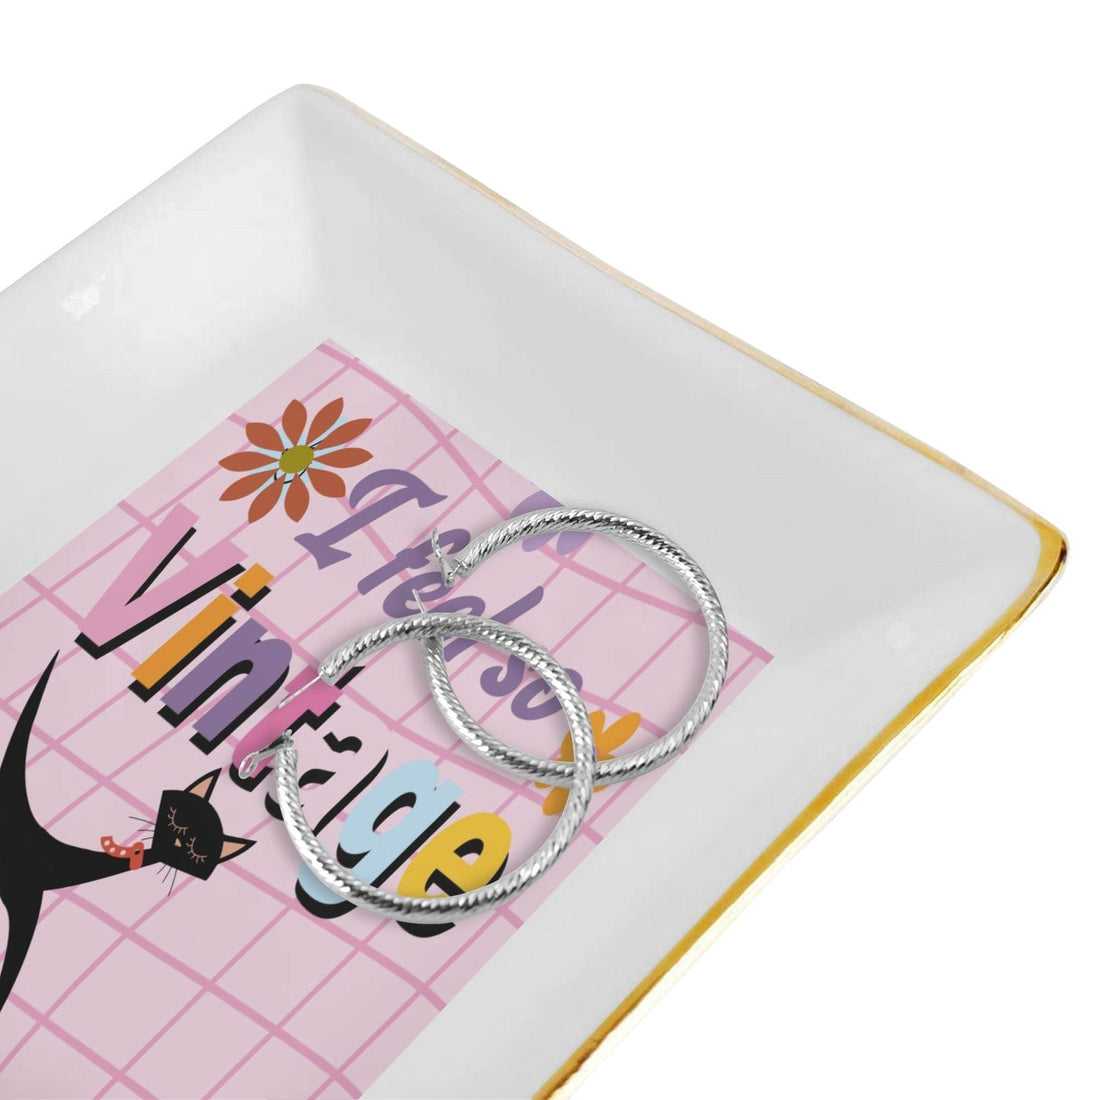 interestprint Boho Chic Atomic Cat “I Feel So Vintage” Ceramic Catchall Dish Jewelry Tray One Size D2874517